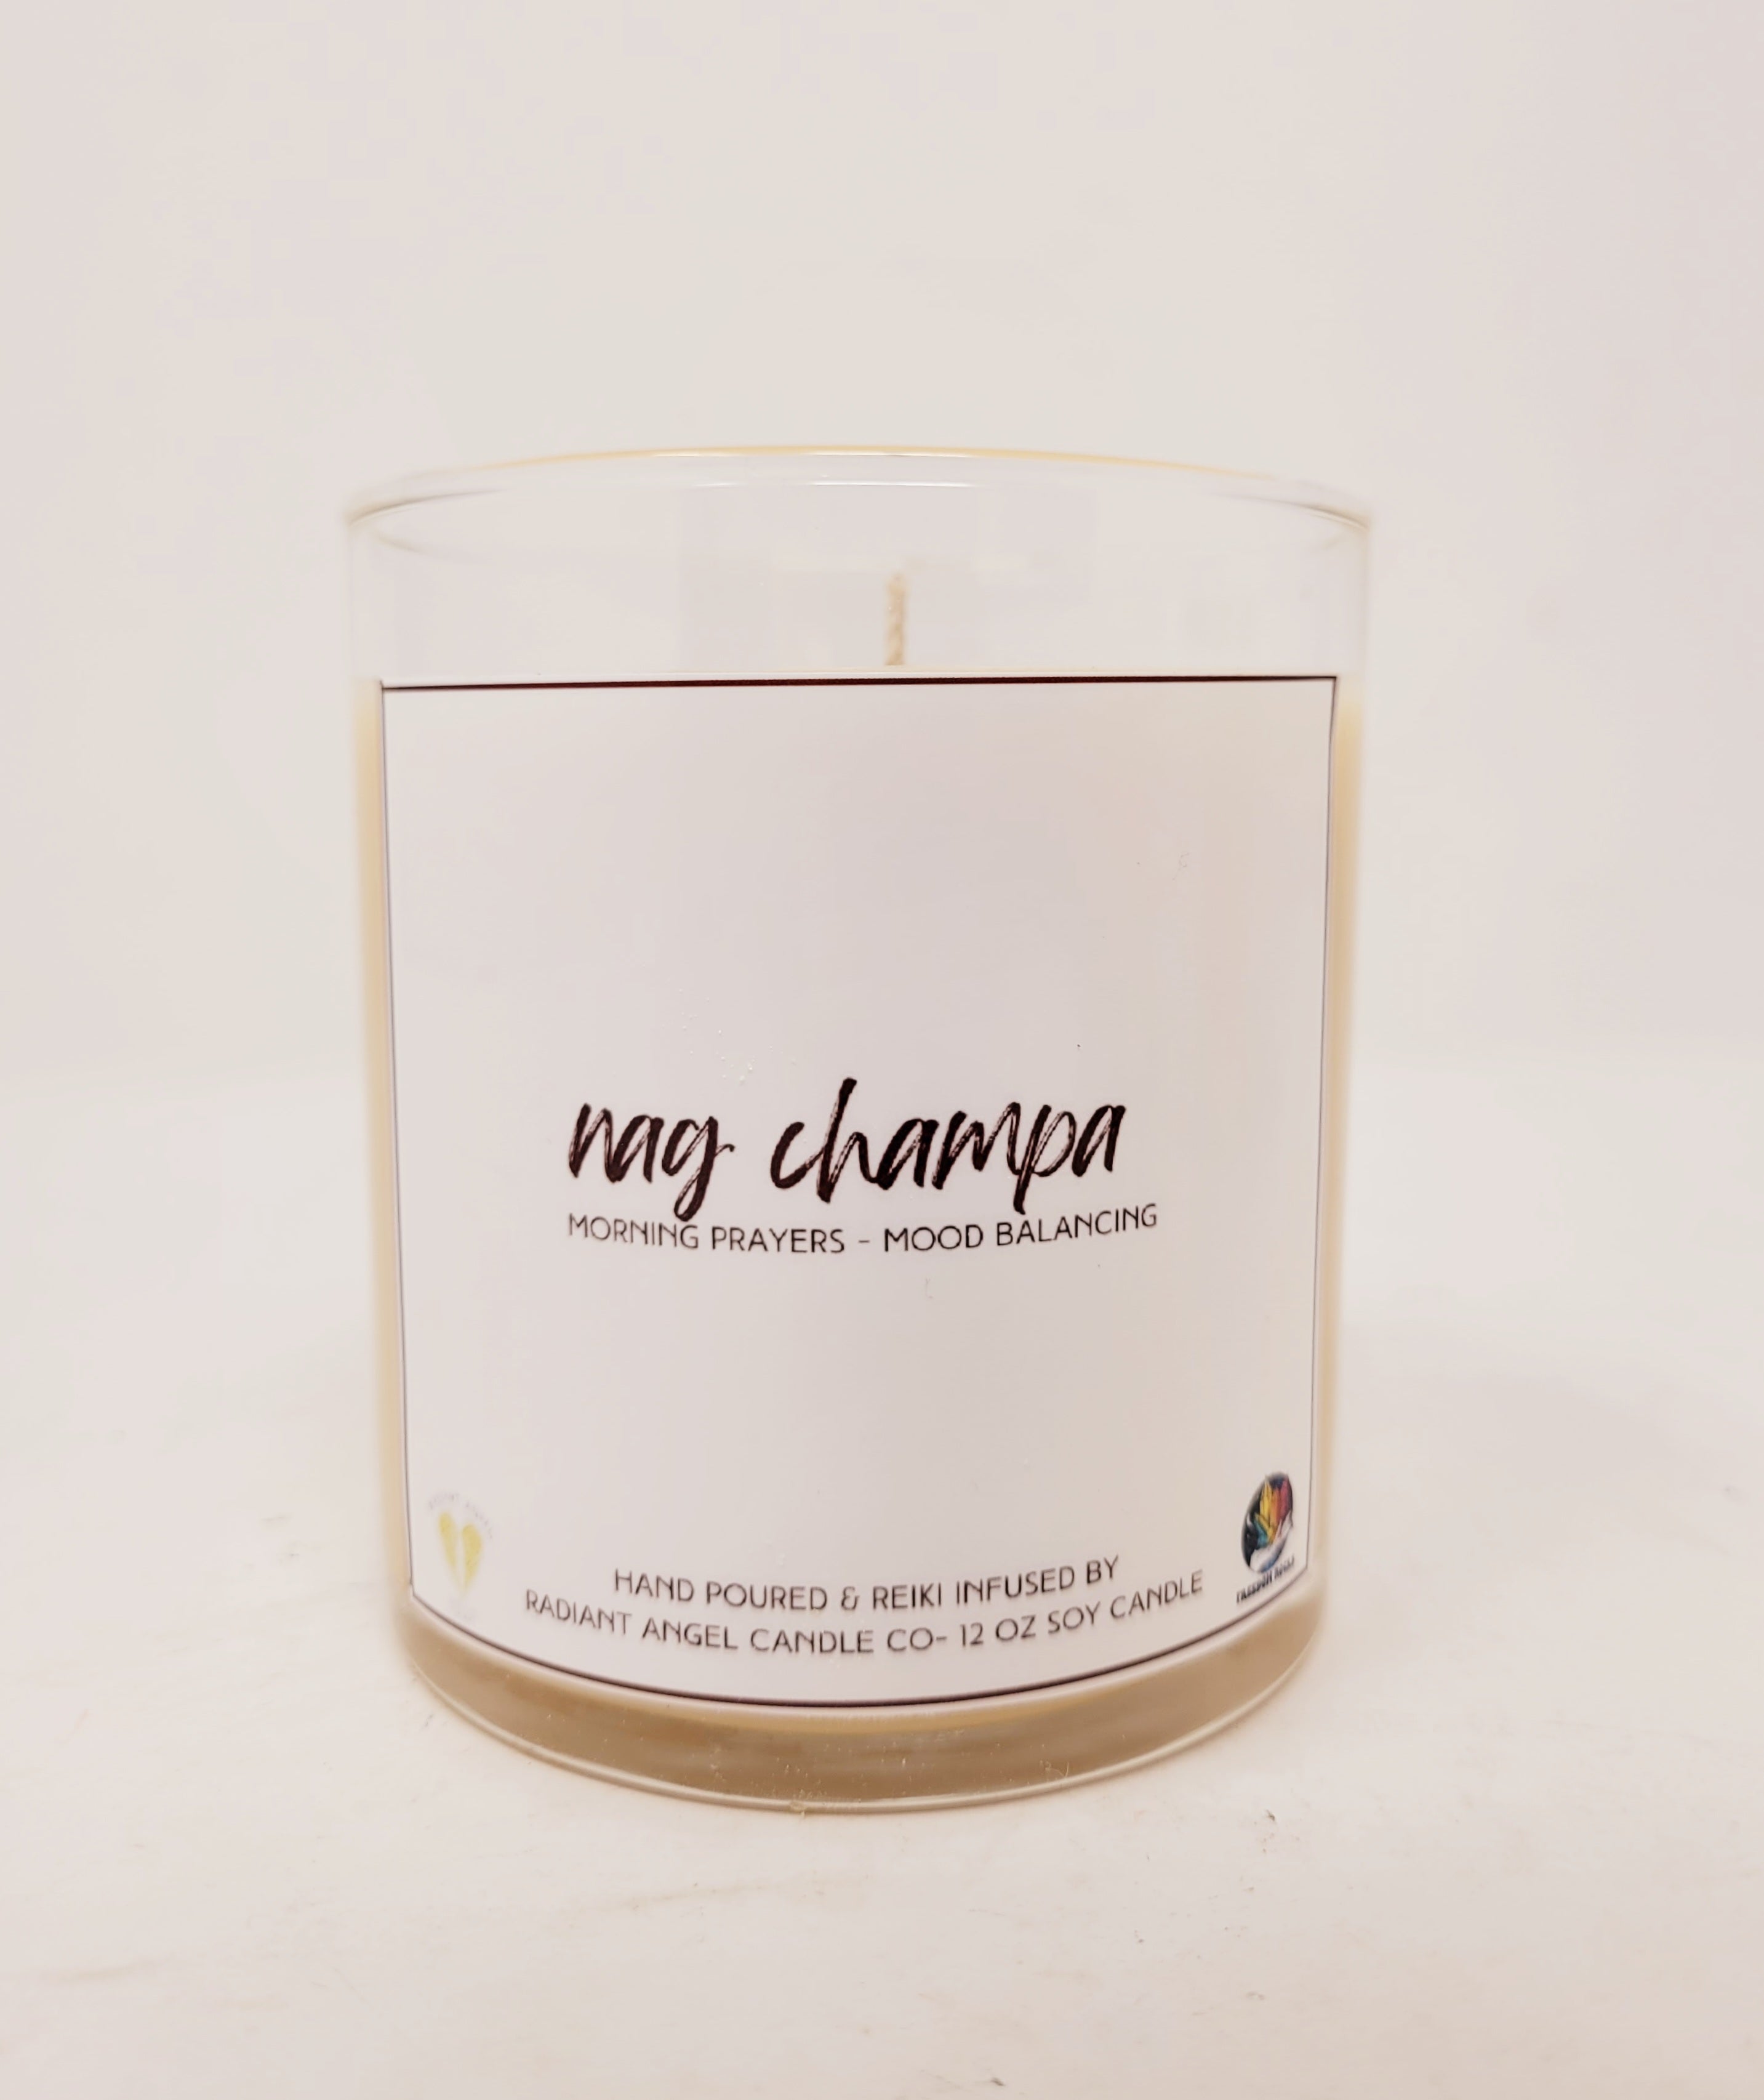 Nag Champa Soy Wax Candle – McVey Mercantile Co.